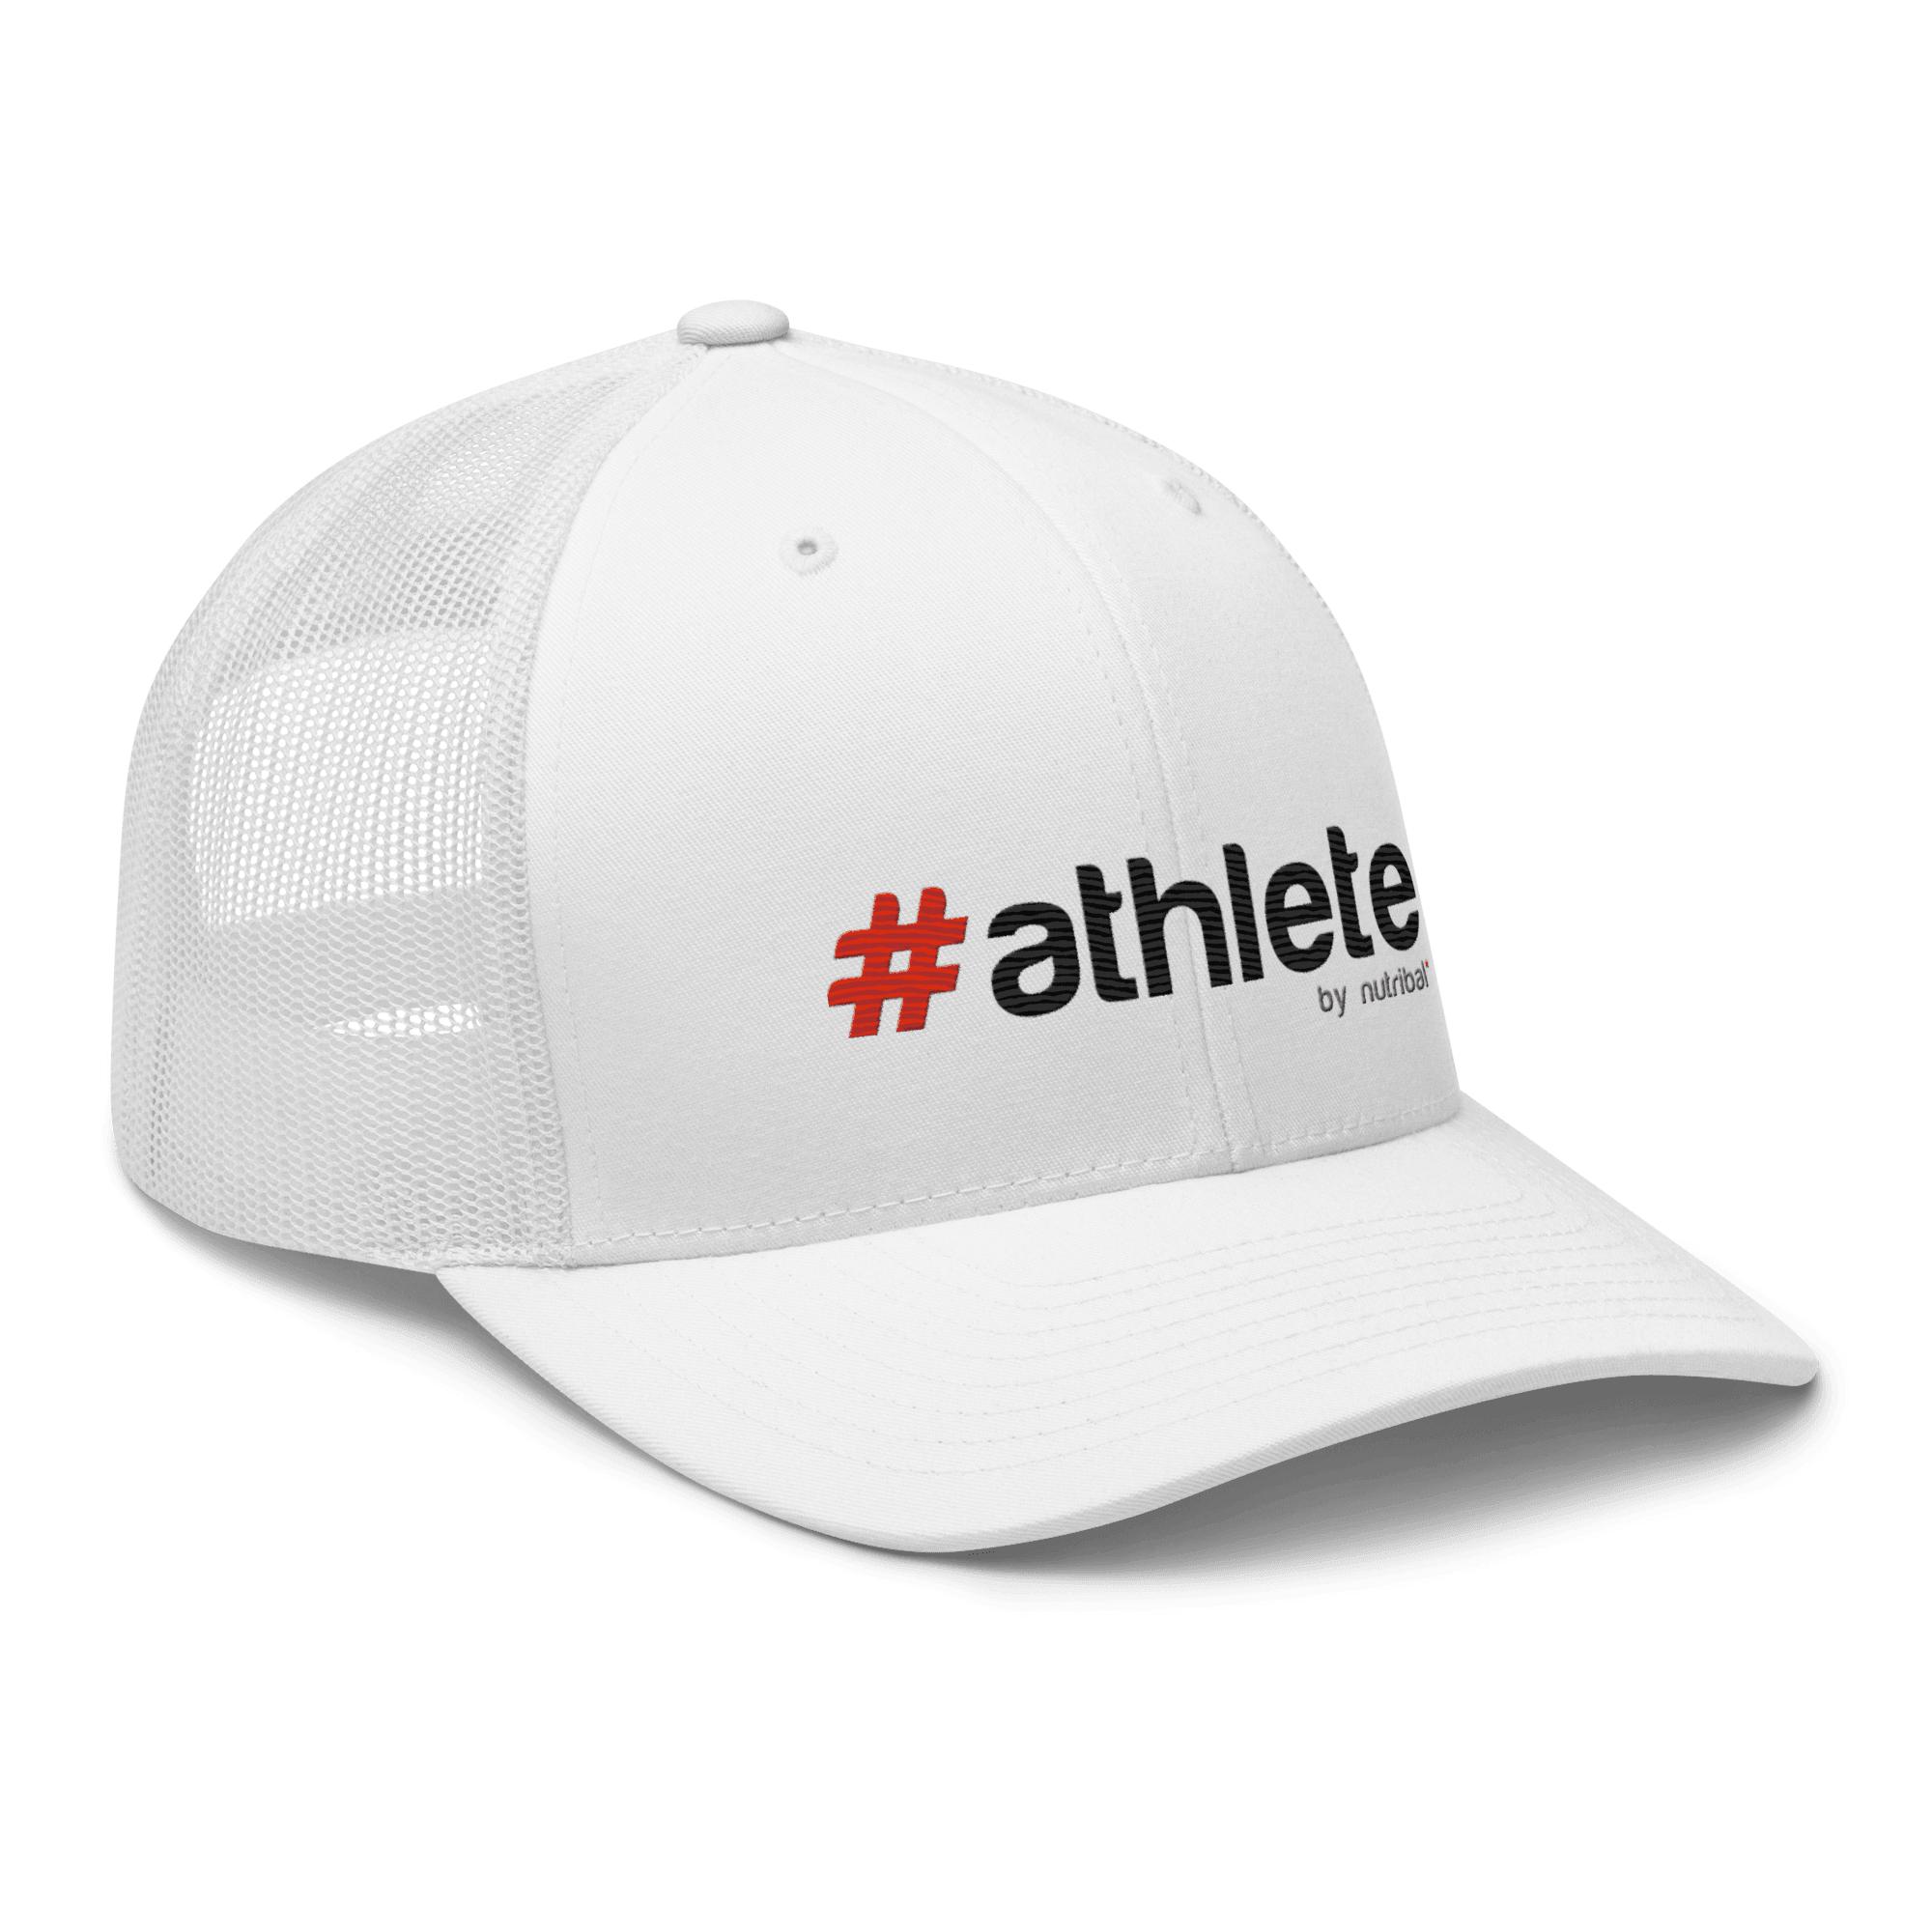 Nutribal THE ATHLETE MESH Unisex Snapback Hat - Nutribal™ - The New Healthy.